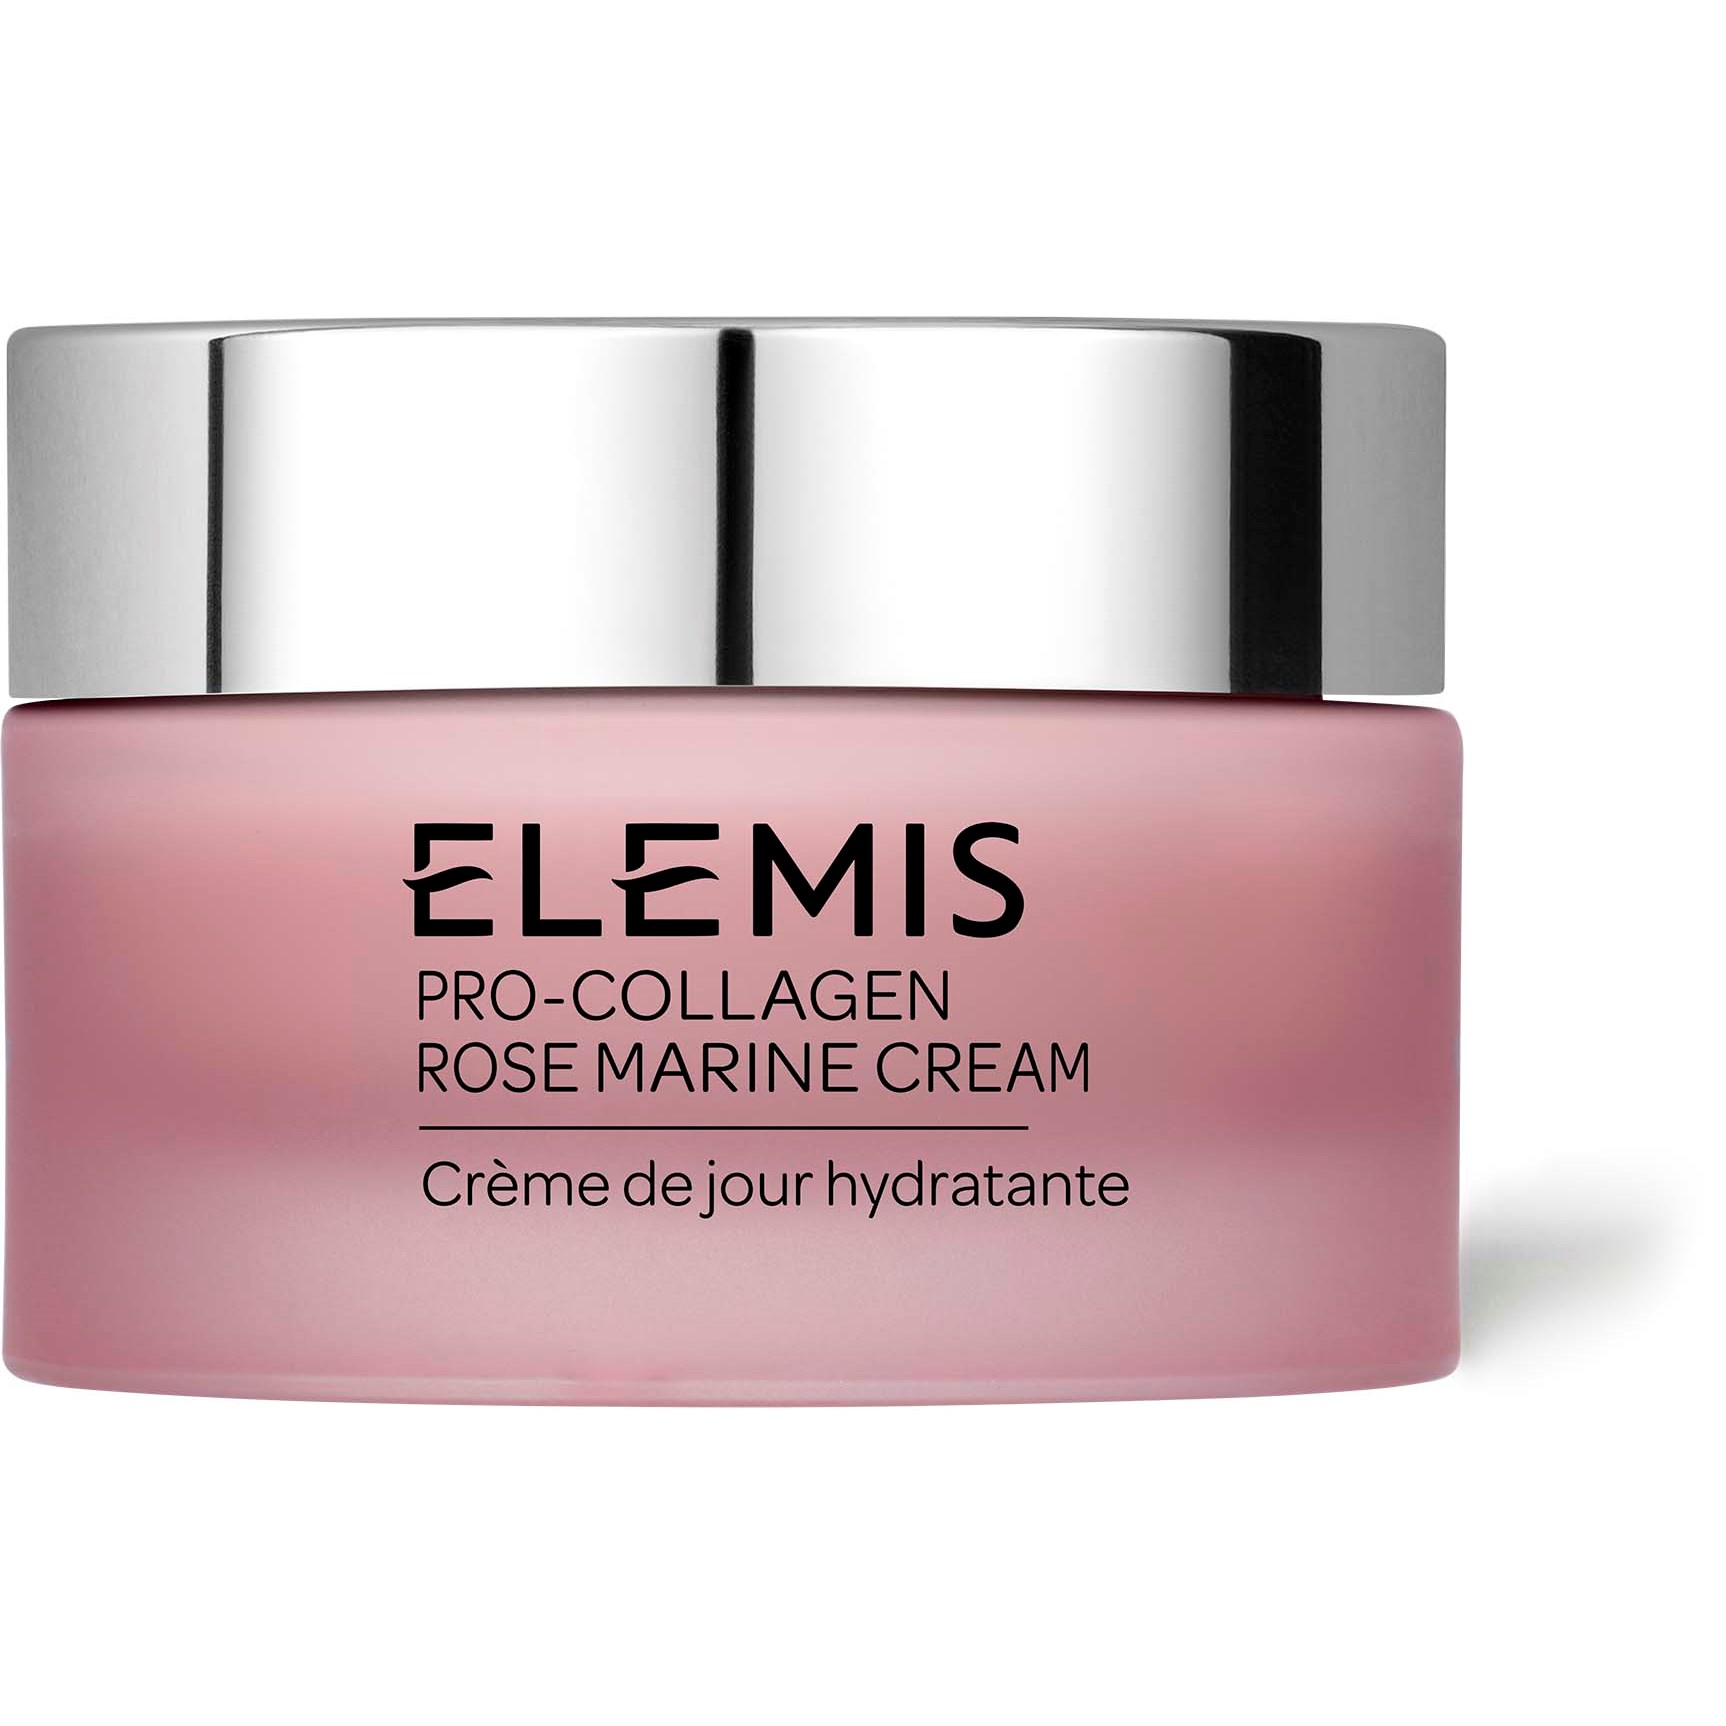 Bilde av Elemis Pro-collagen Rose Marine Cream 210 G